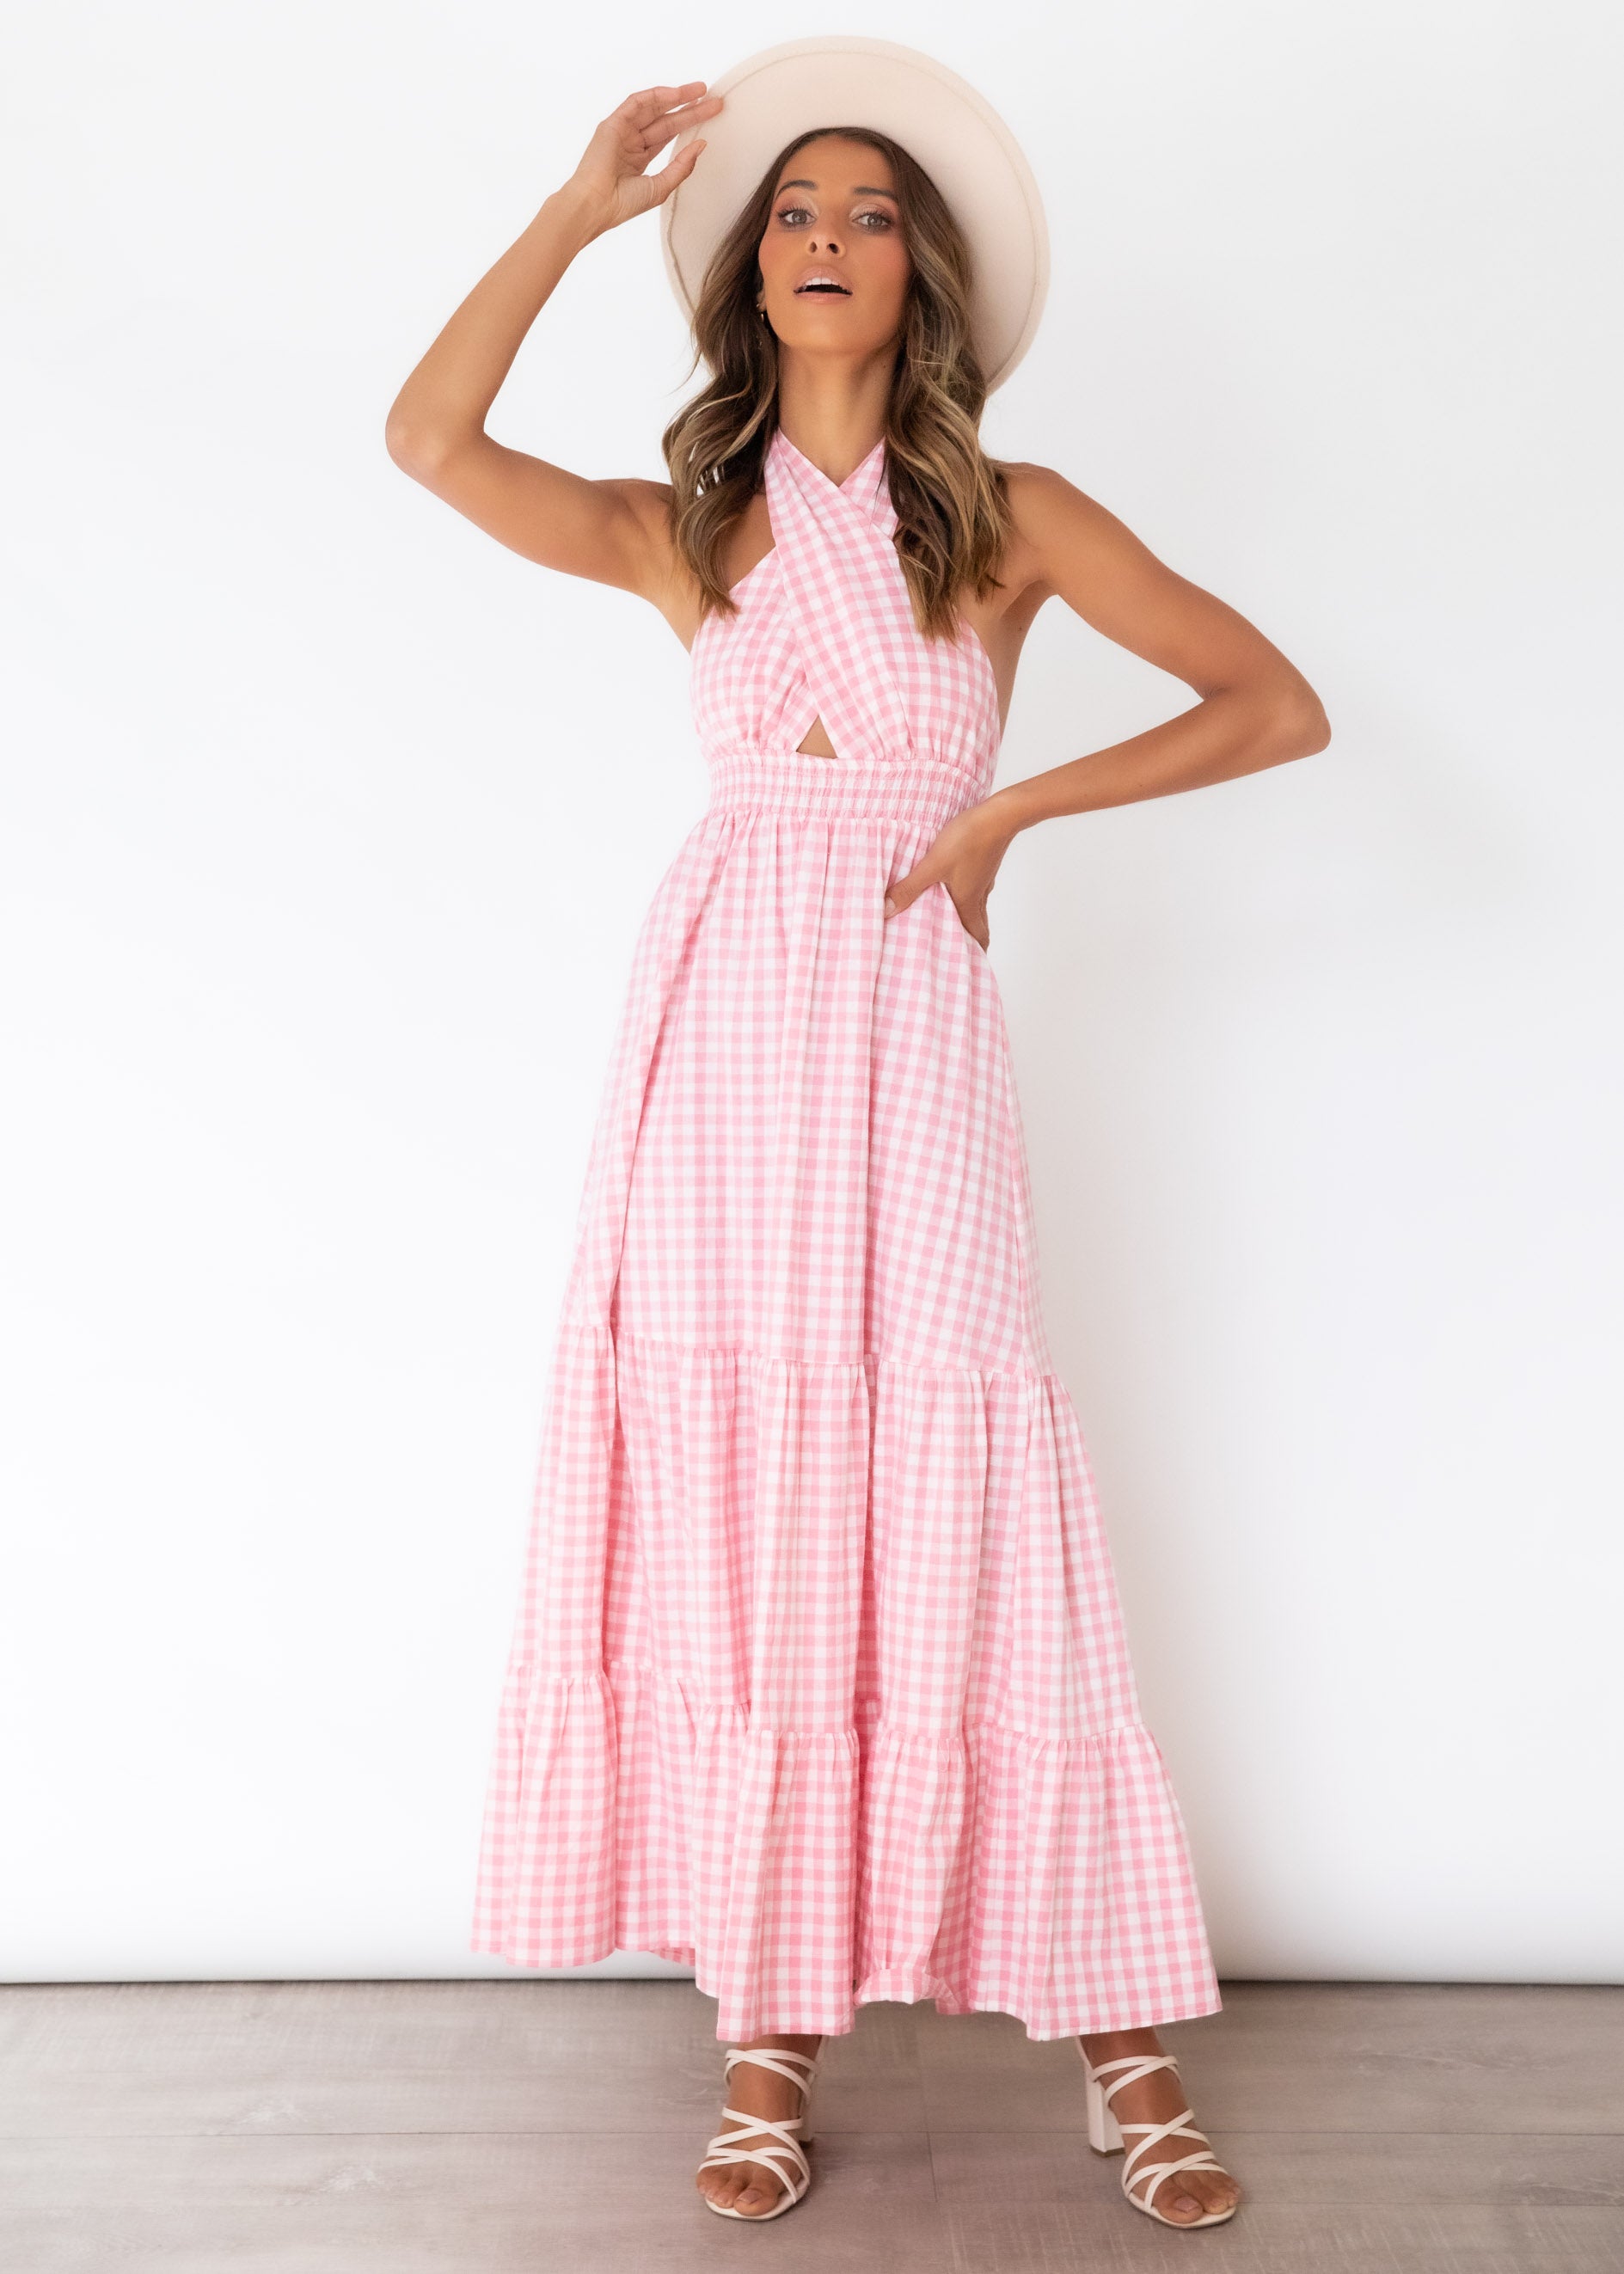 New Purpose Maxi Dress - Pink Check